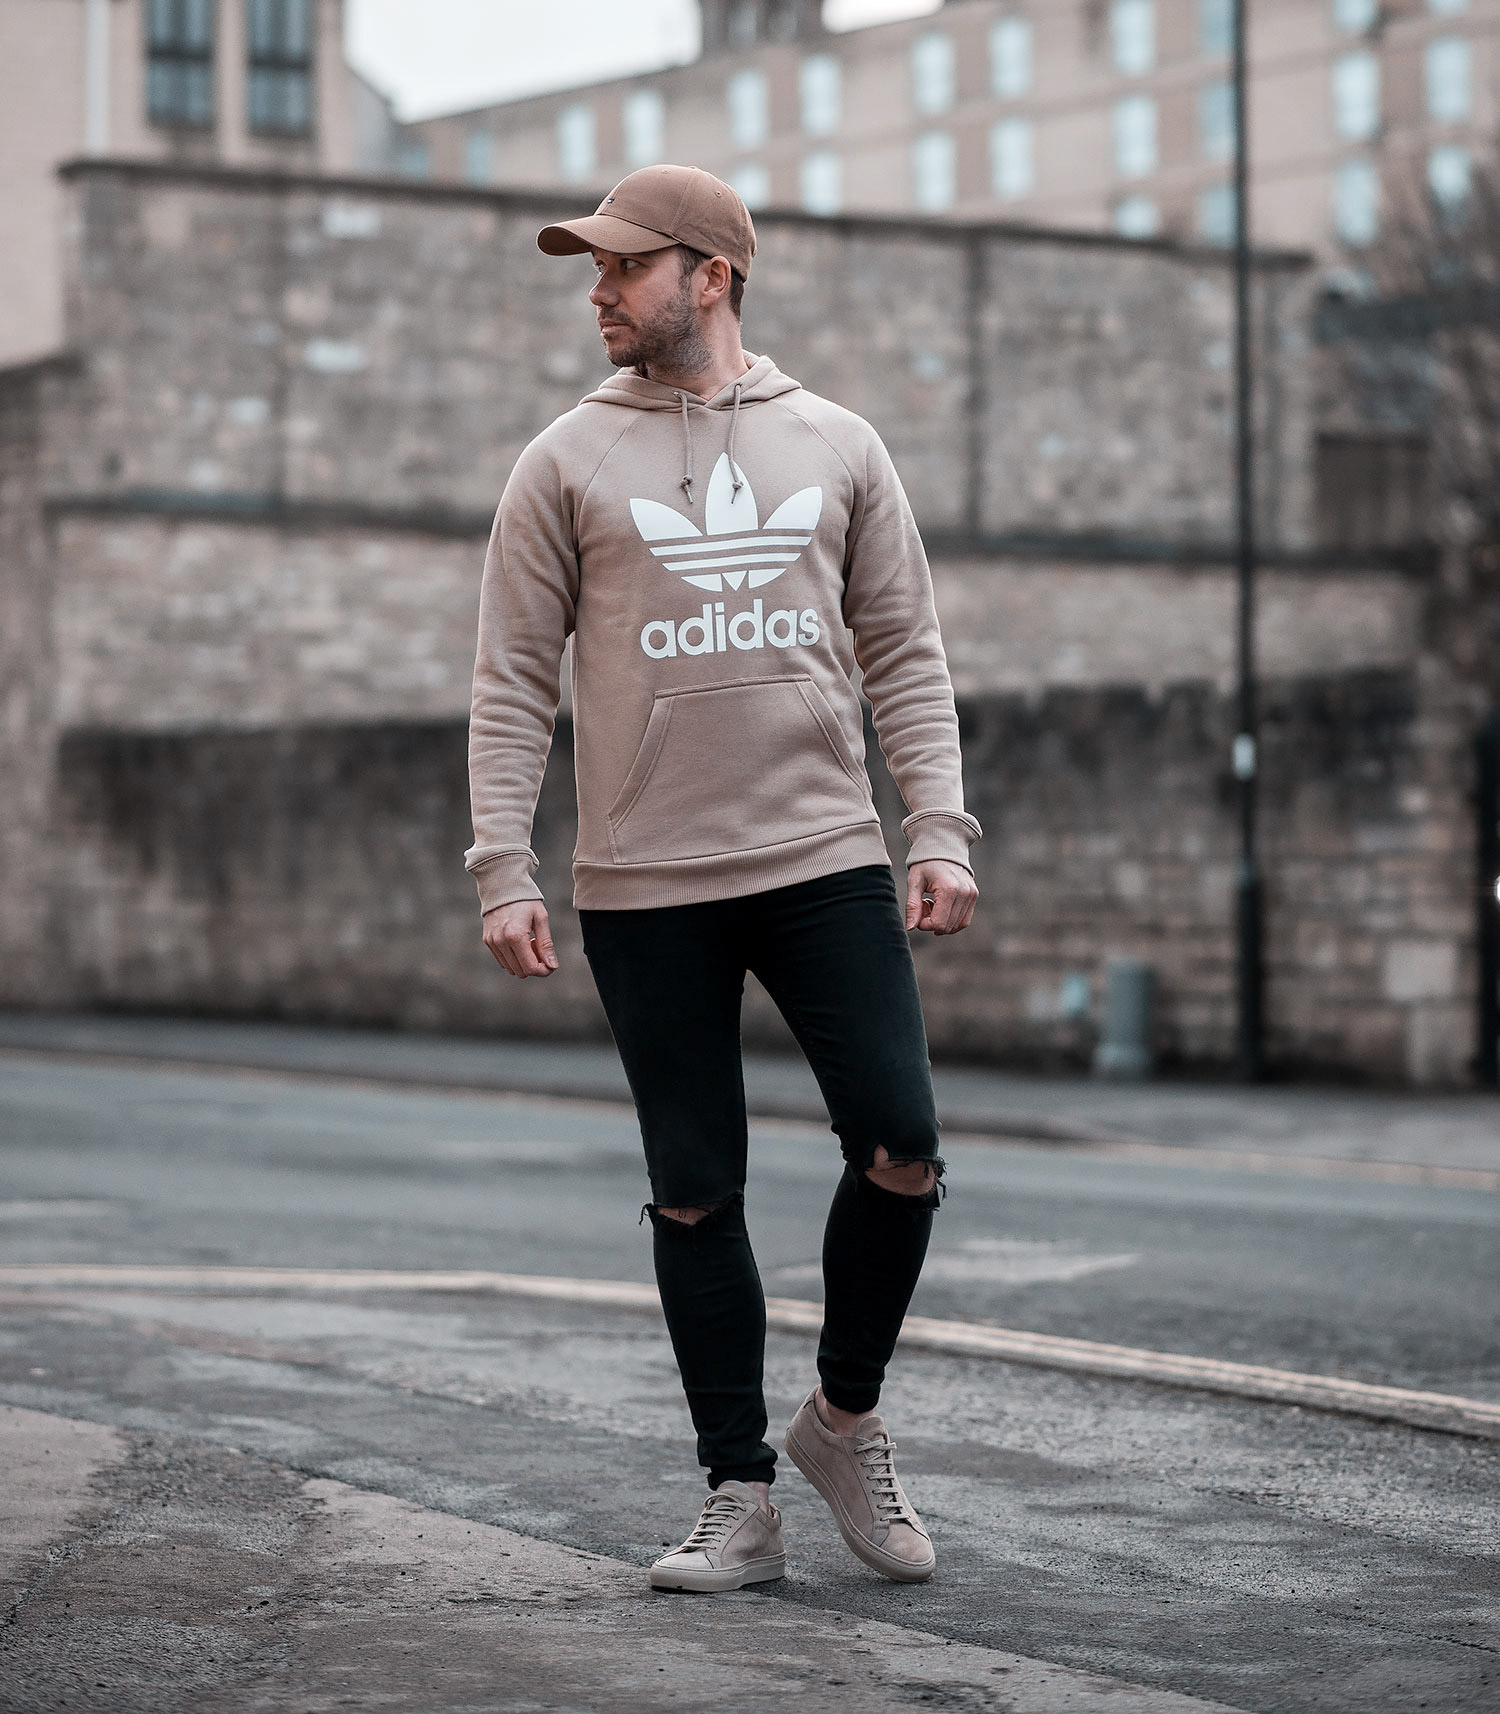 Adidas Trefoil Sweatshirt Street Style Outfit | Your Average Guy